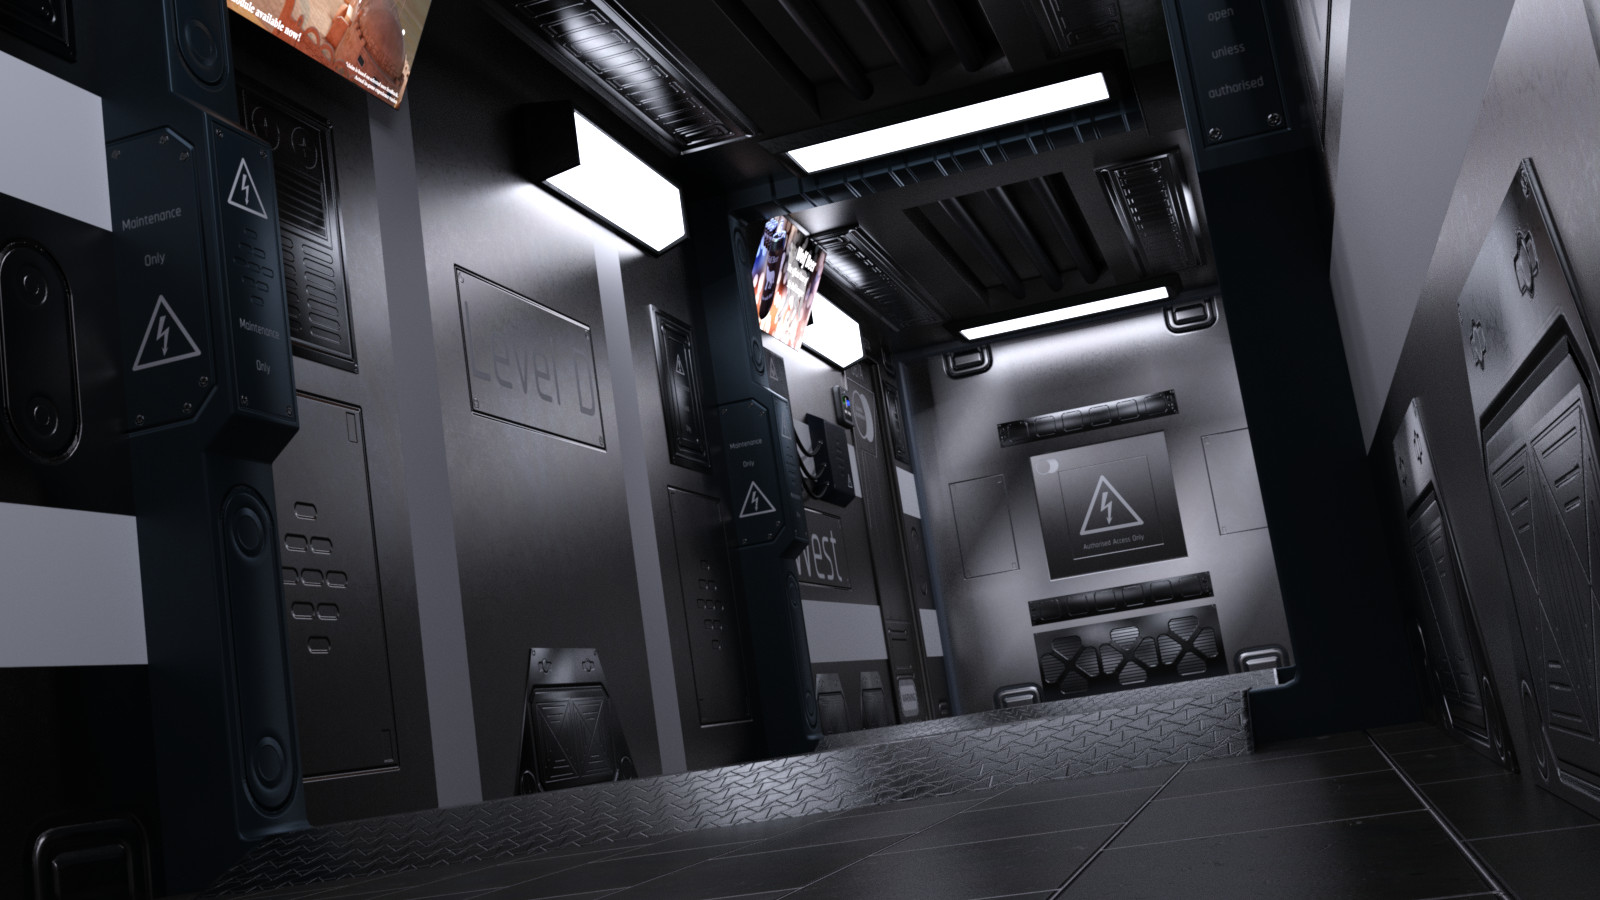 Compact Cyberpunk Apartment Corridor by: Silent Winter, 3D Models by Daz 3D